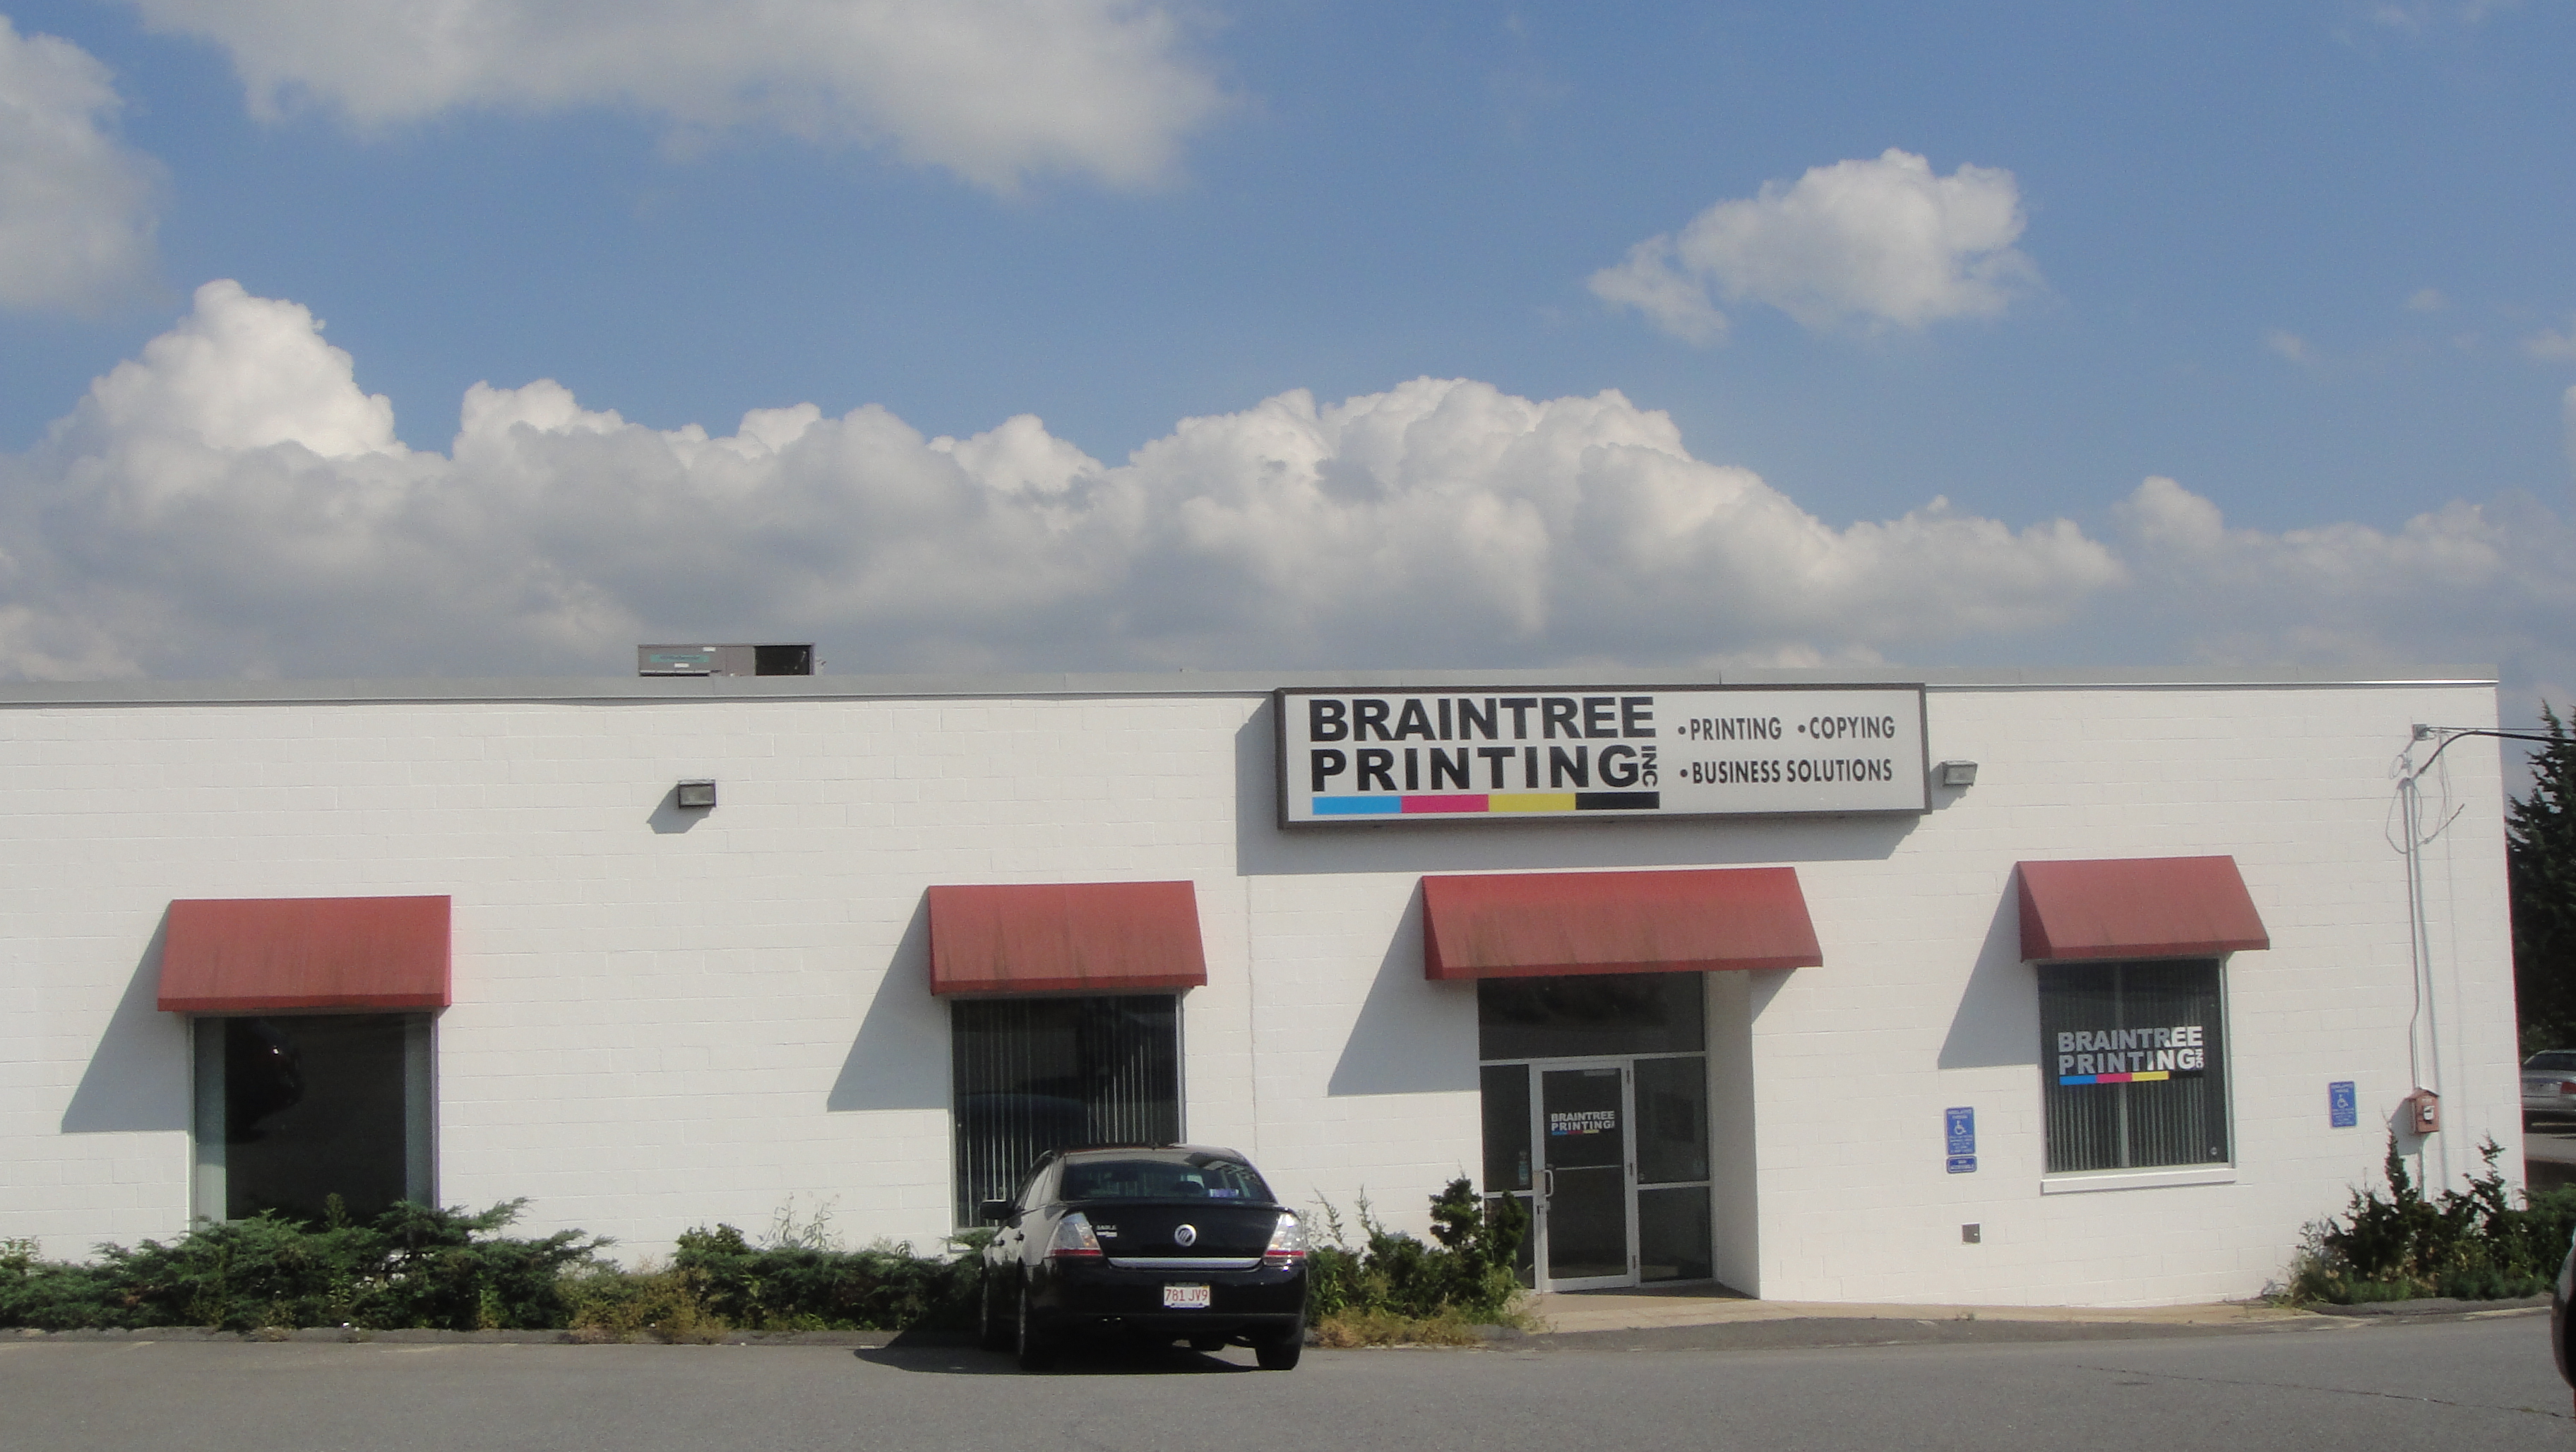 Braintree Printing's plant on Wood Road in Braintree, Massachusetts.